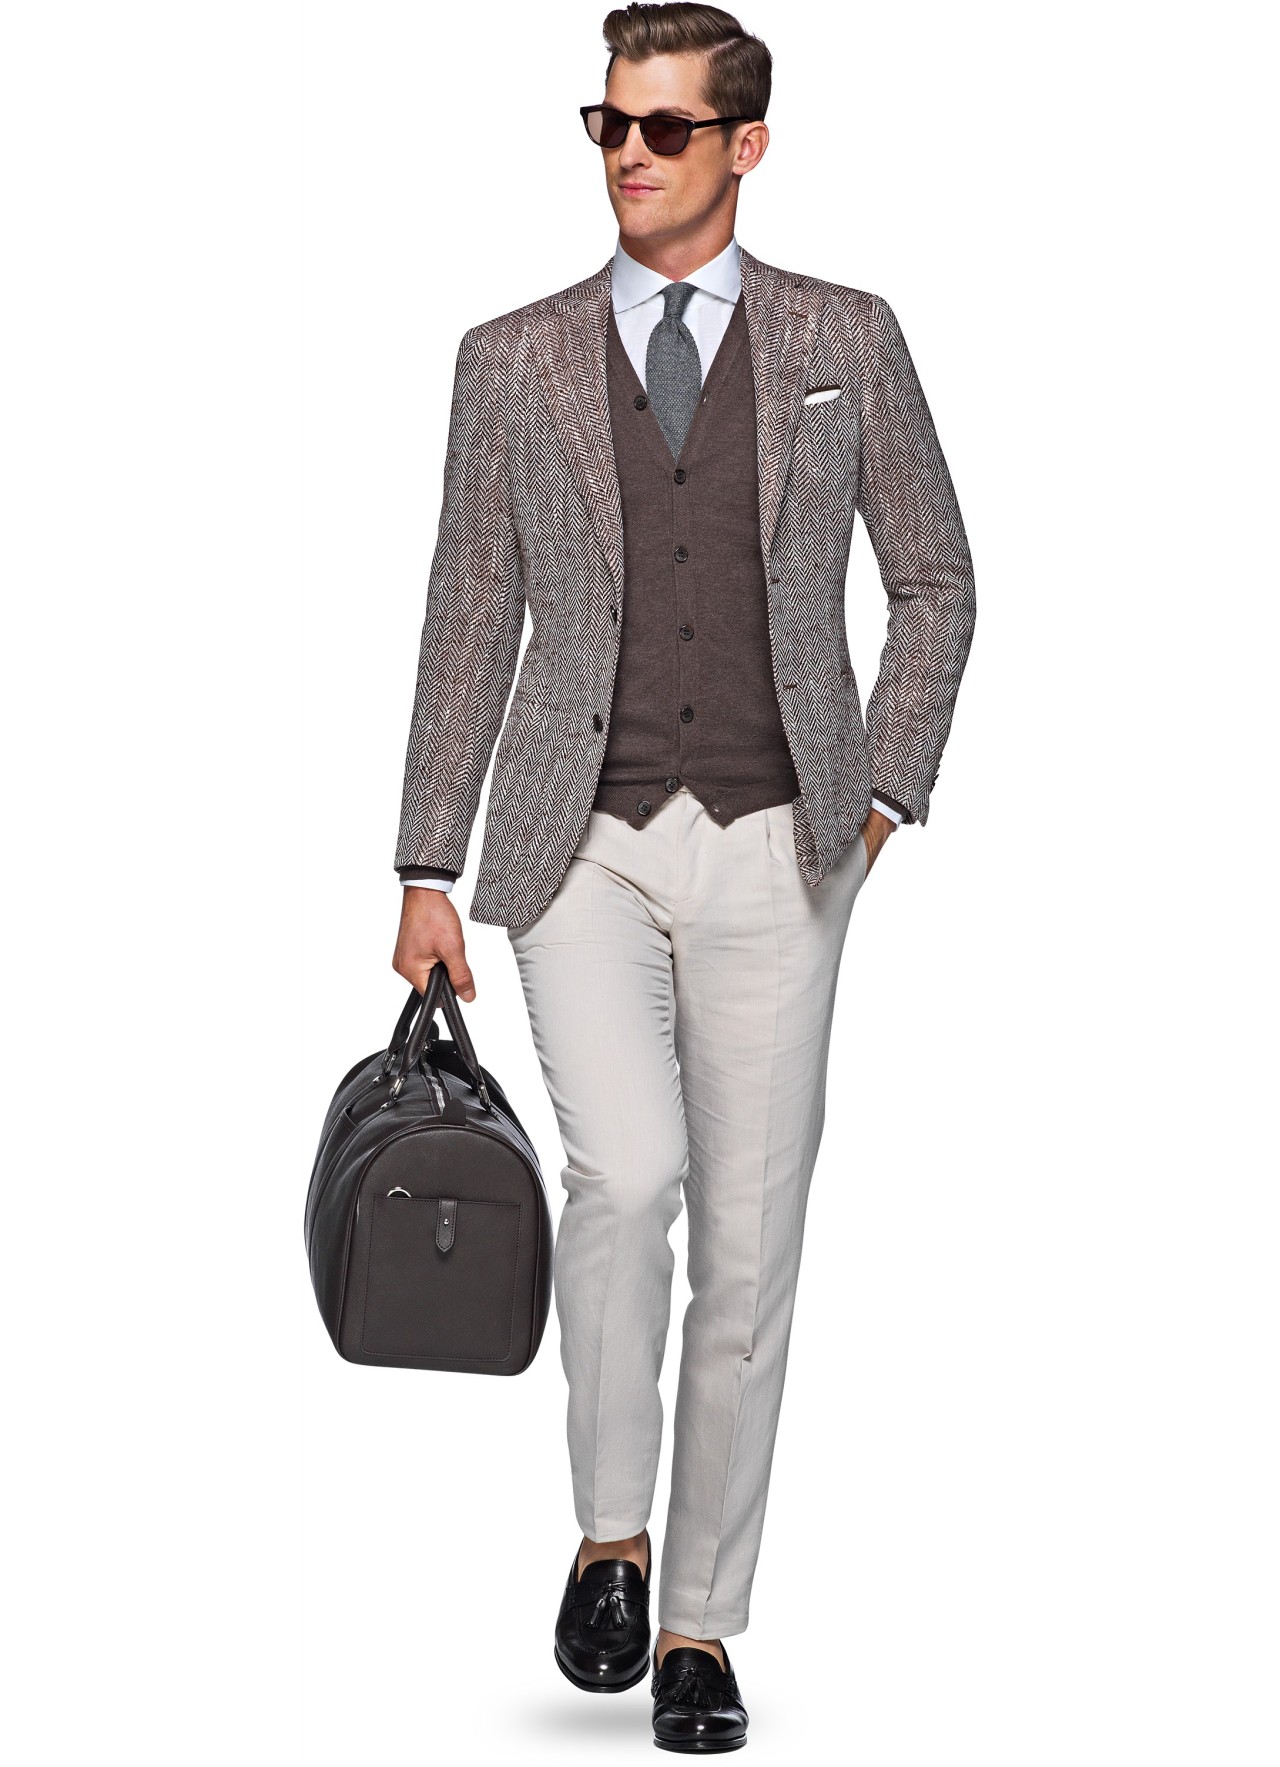 Parfait Gentleman | Men's Fashion Blog - Suitsupply SS16